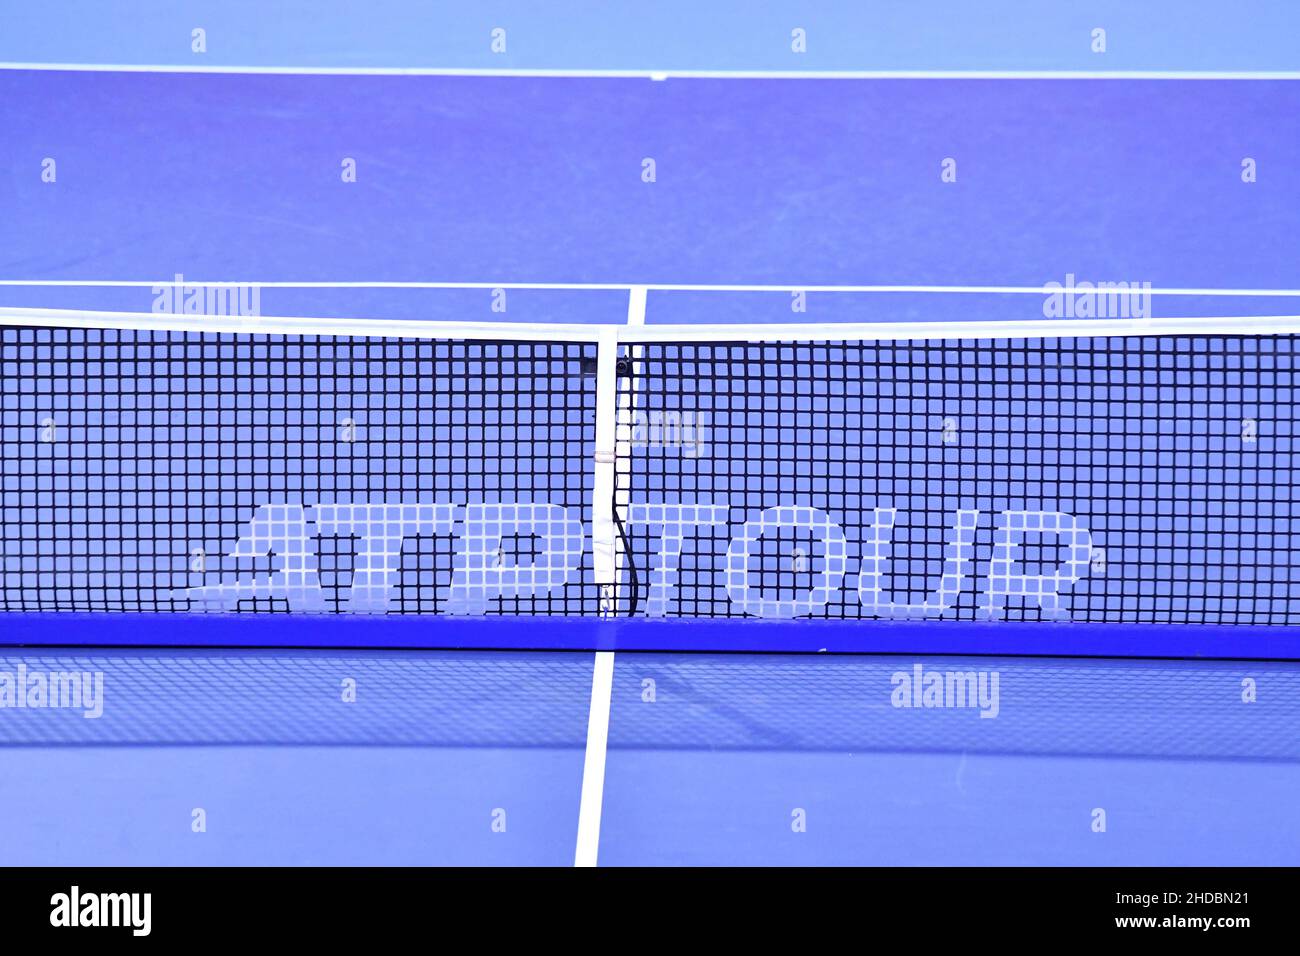 Tennis net on blue surface the Next Gen ATP Finals, in Milan. Stock Photo